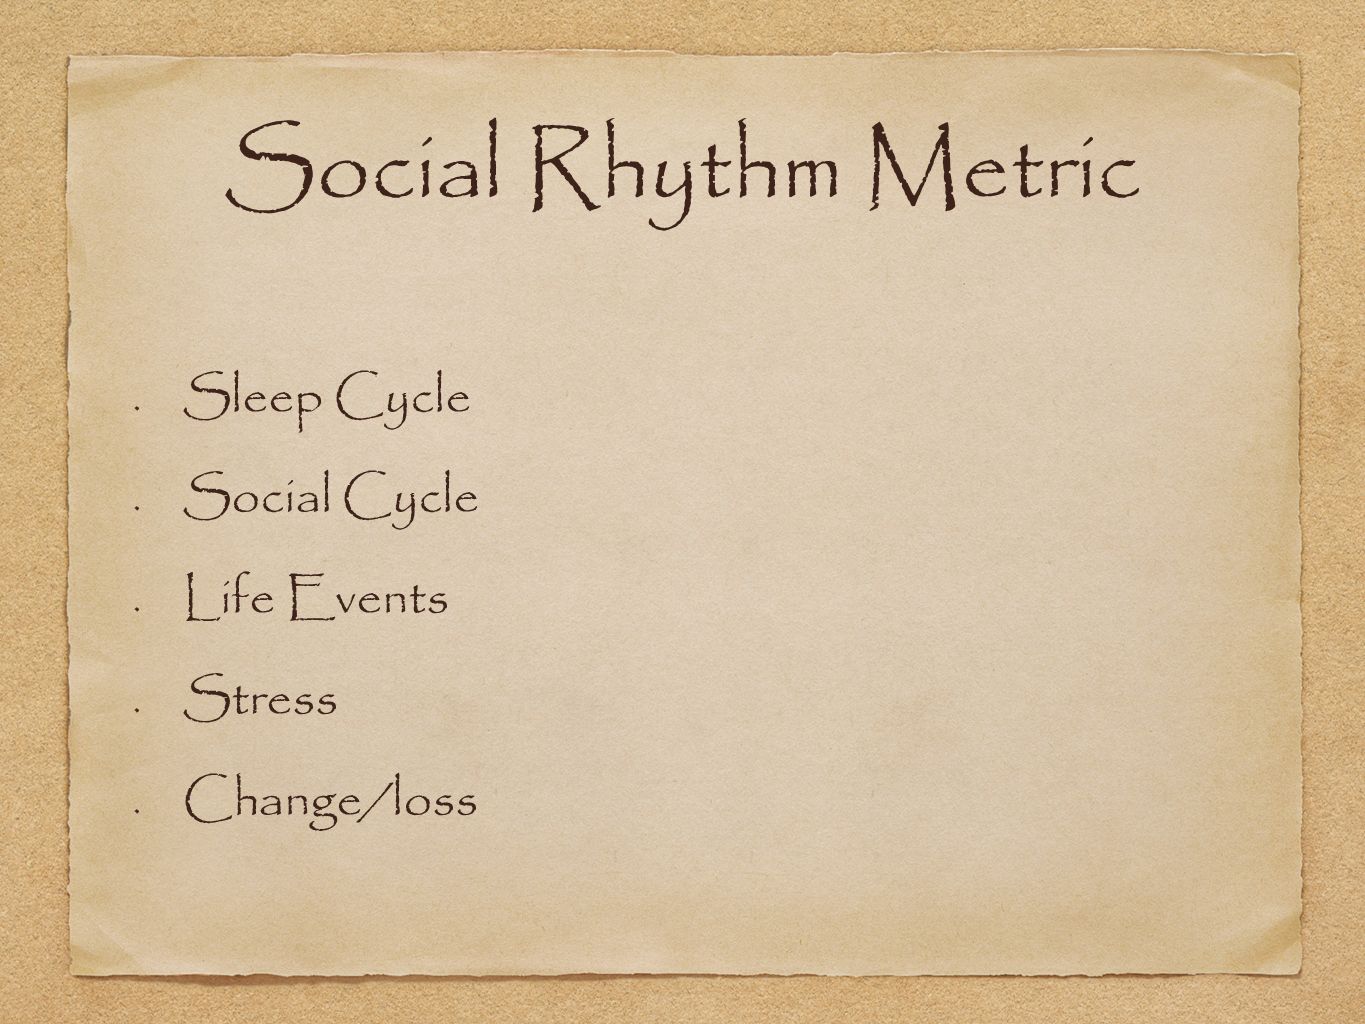 Social Rhythm Metric Sleep Cycle Social Cycle Life Events Stress Change/loss